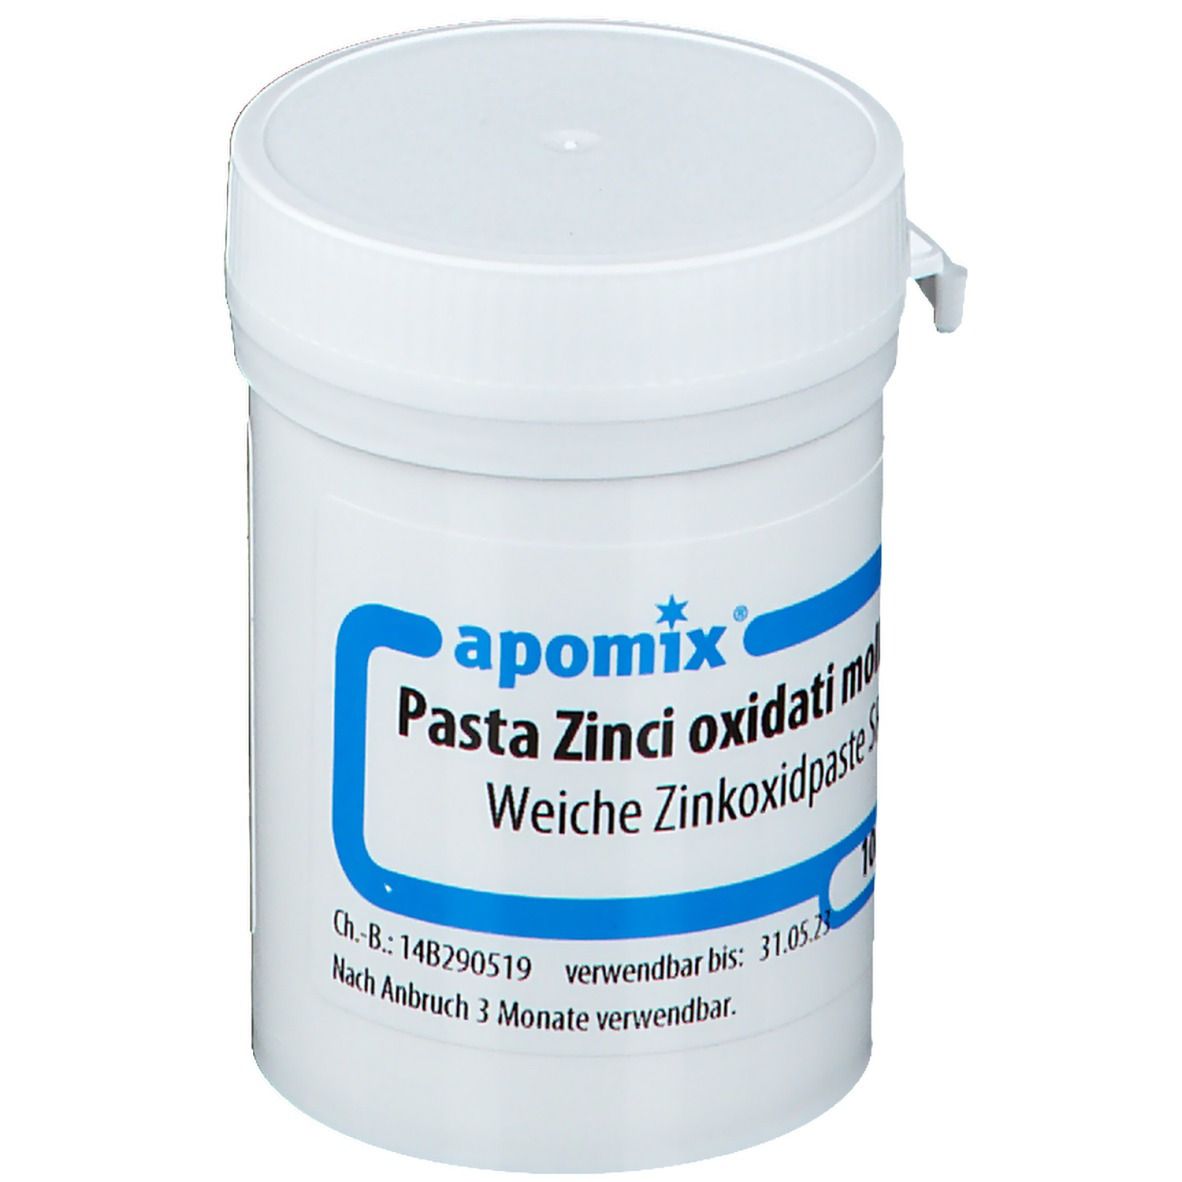 apomix® Pasta Zinci oxidati mollis SR